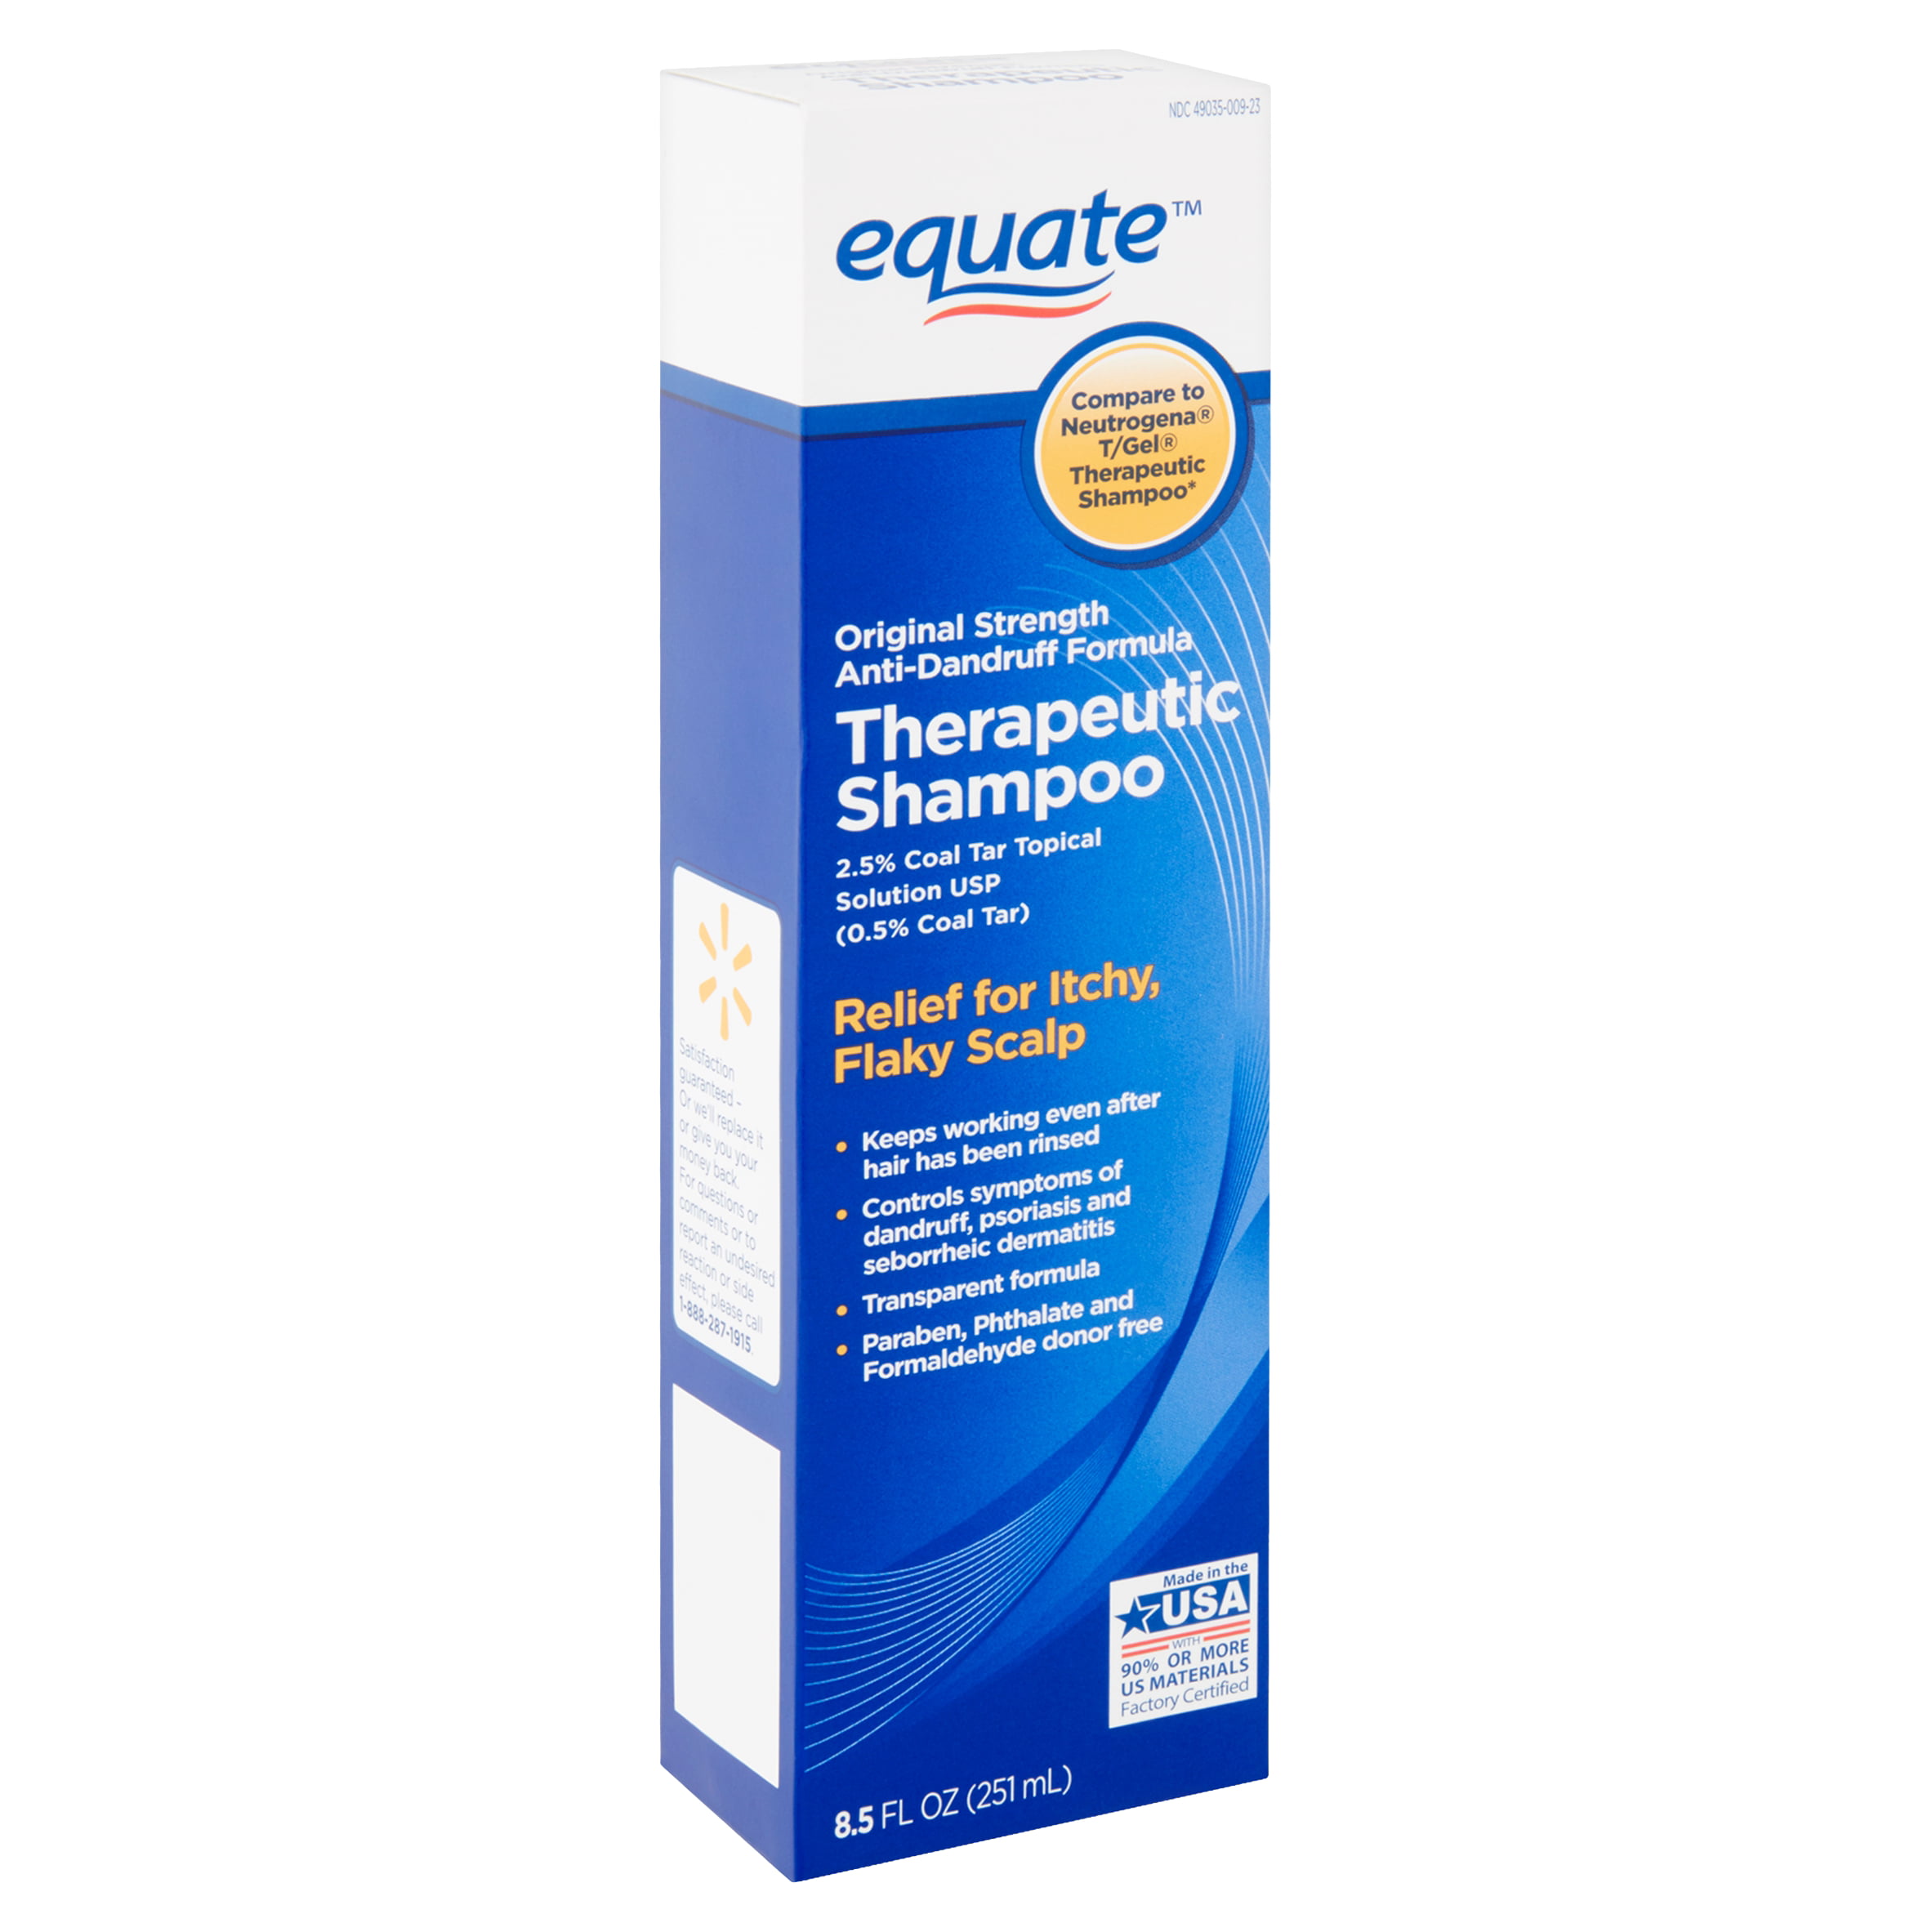 Equate Anti-Dandruff Therapeutic Shampoo, Original Strength, 8.5 fl oz